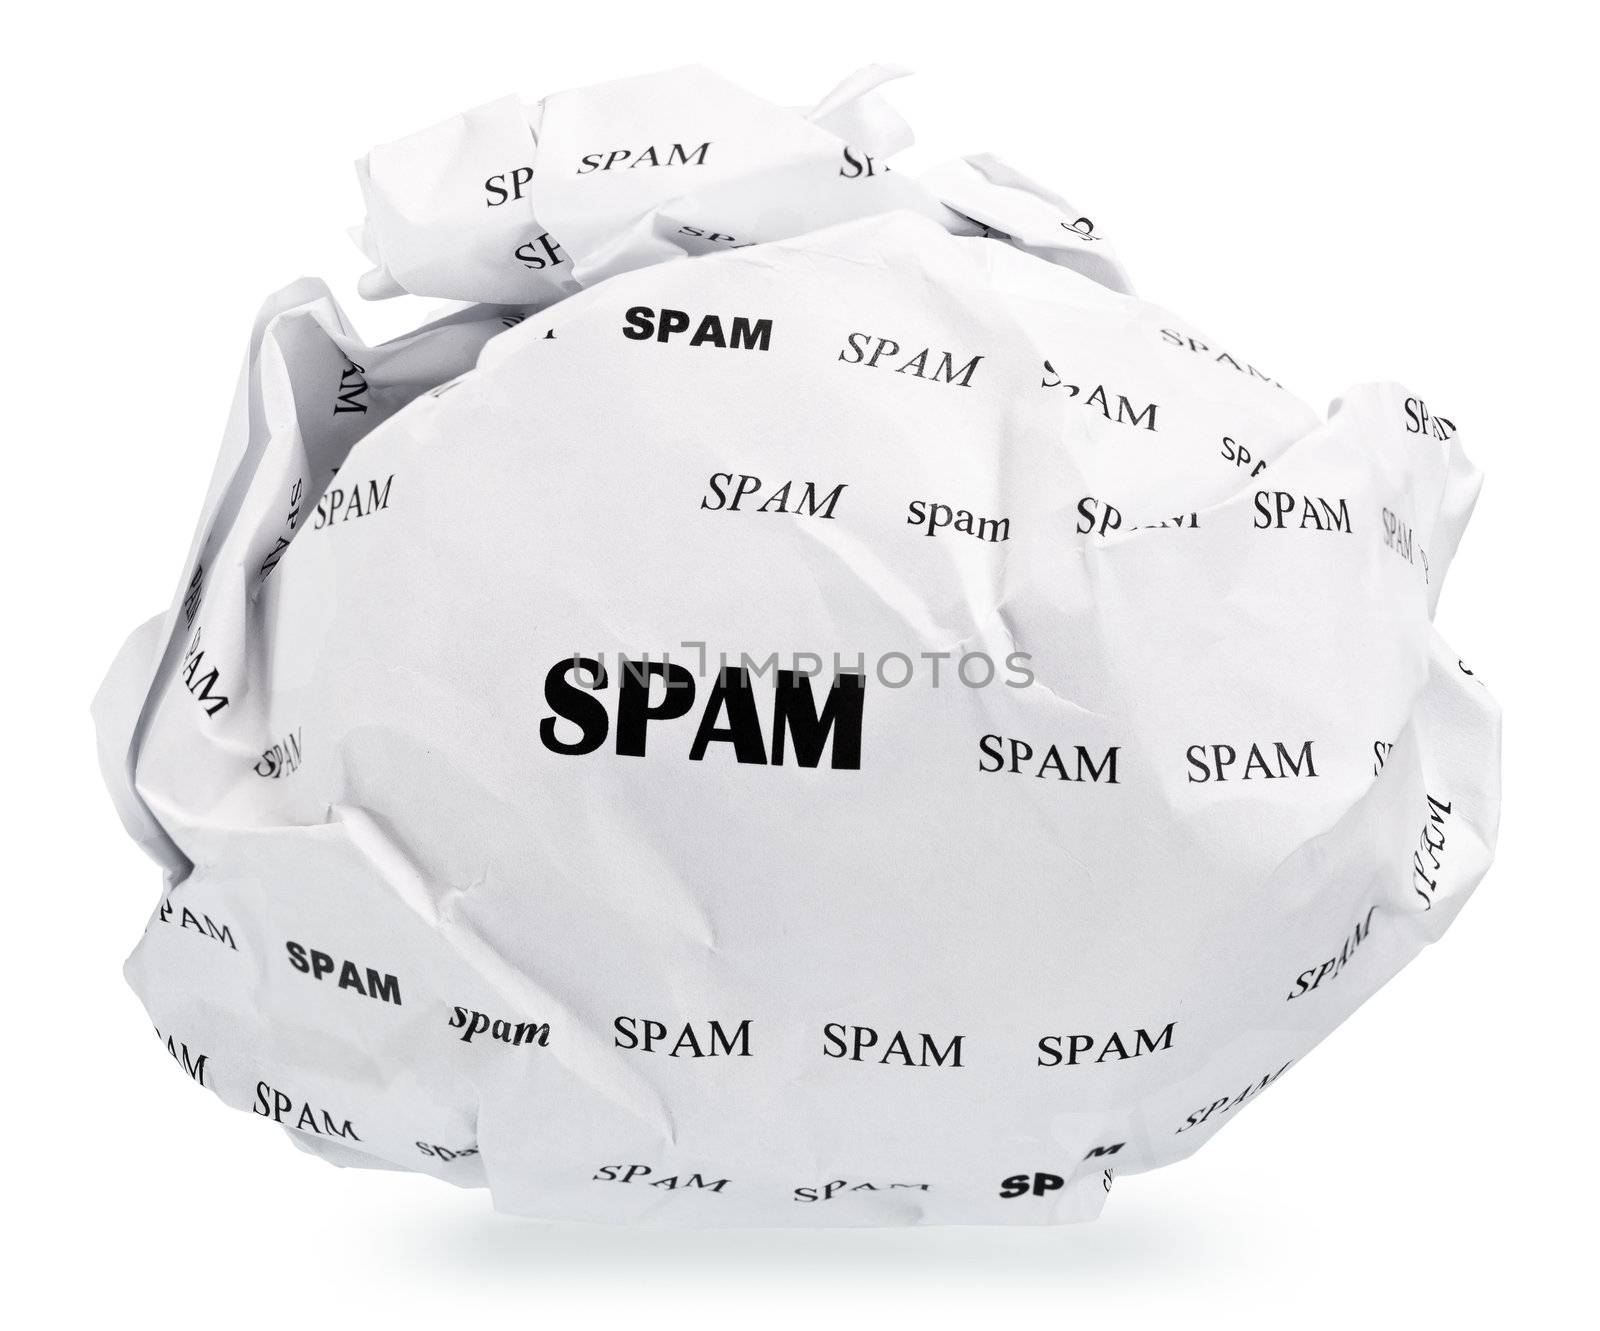 spam, spam, spam by Sergieiev